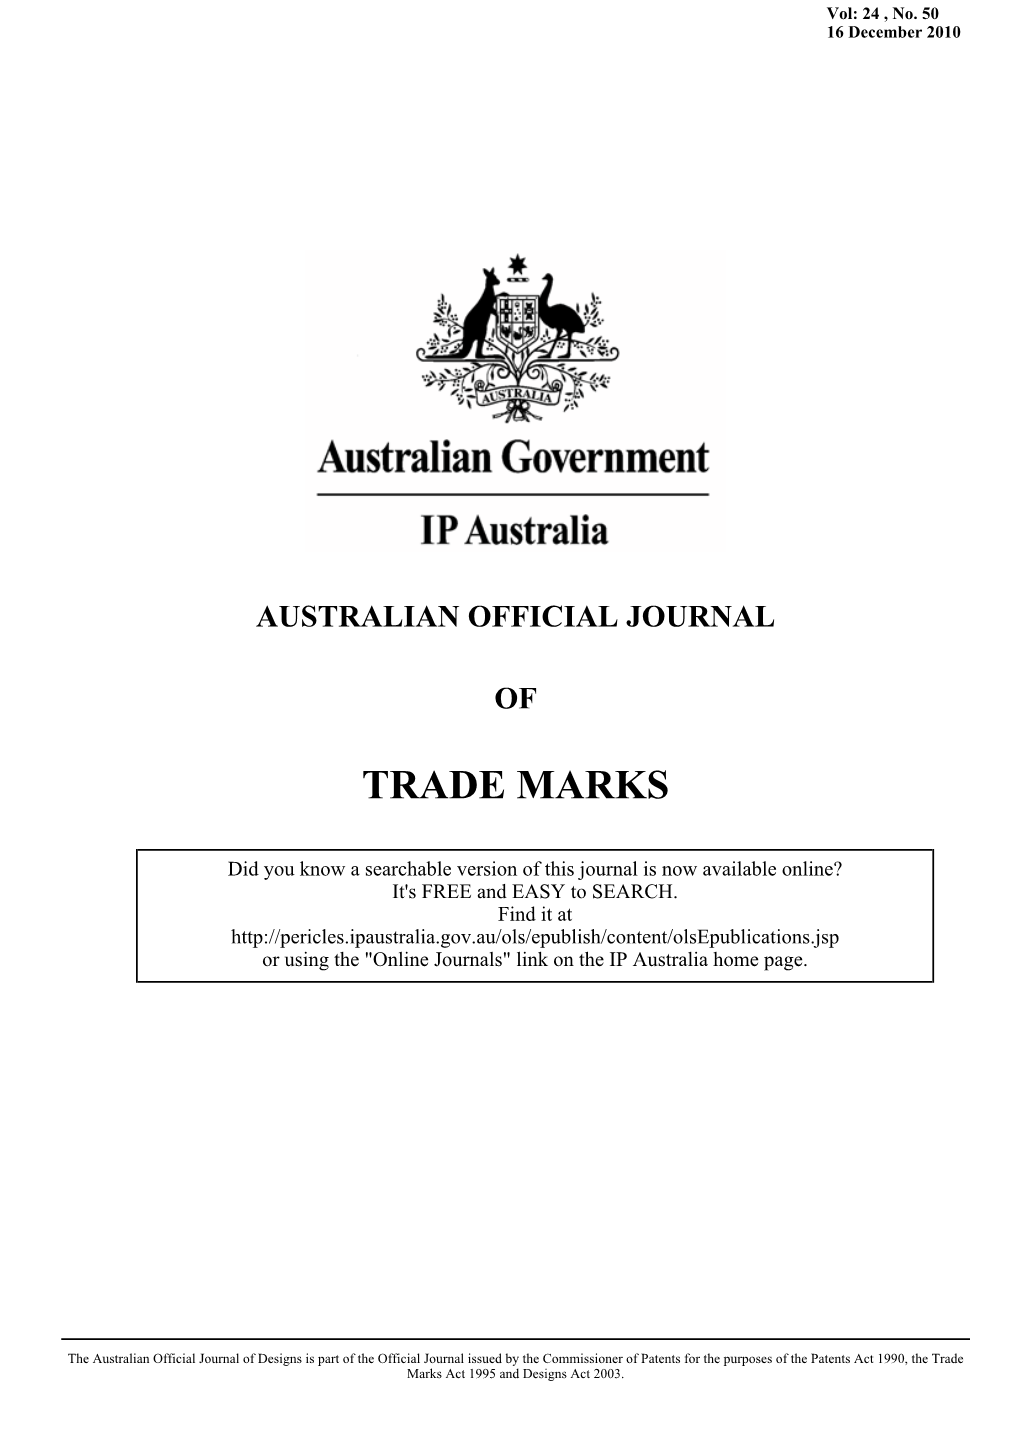 AUSTRALIAN OFFICIAL JOURNAL of TRADE MARKS 16 December 2010